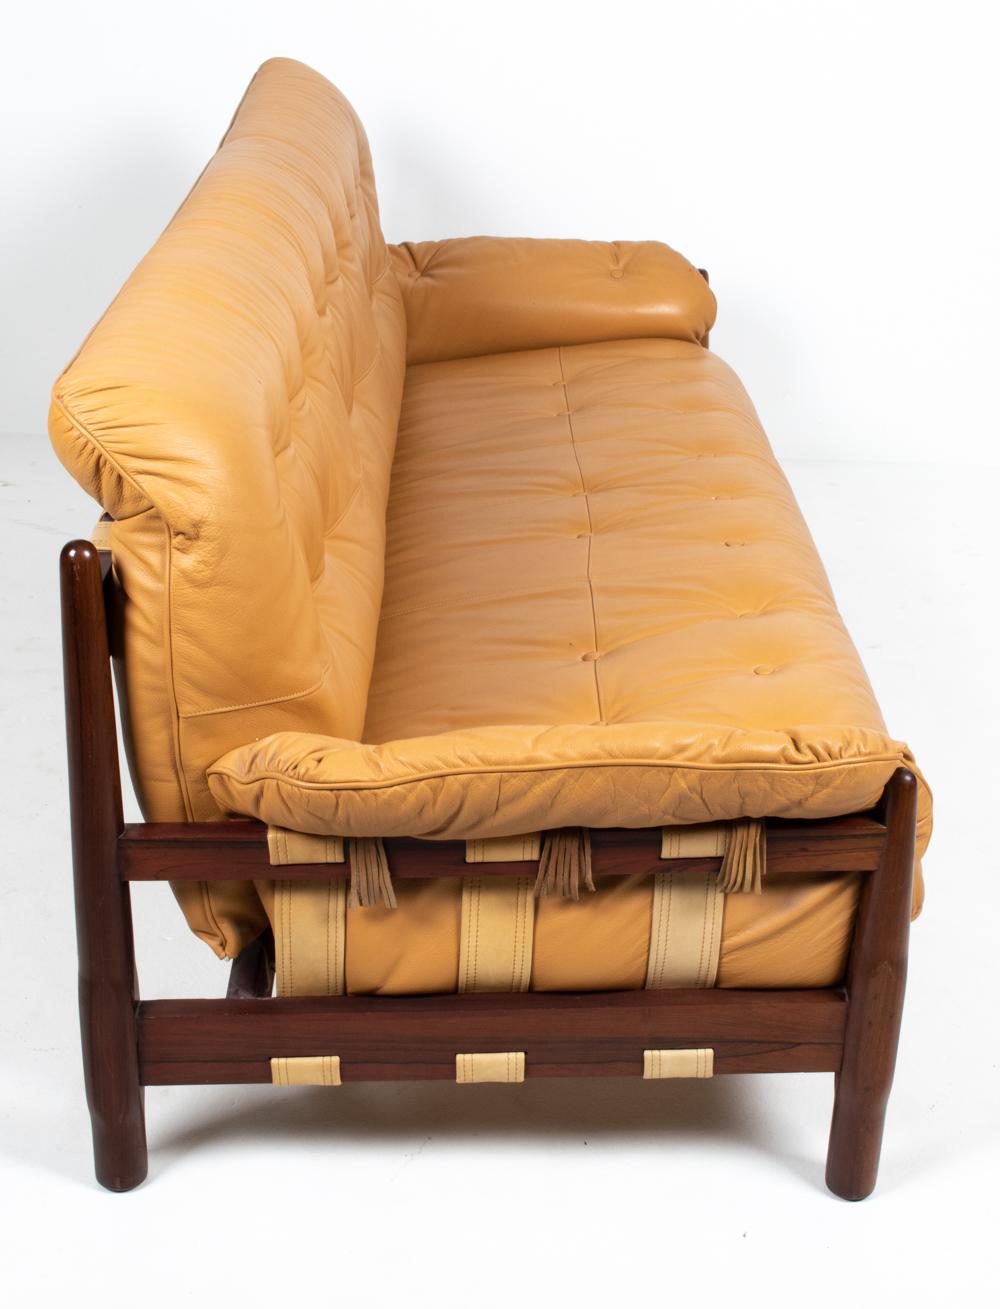 Brazilian Modernist Rosewood & Leather Sofa, circa 1970s For Sale 6